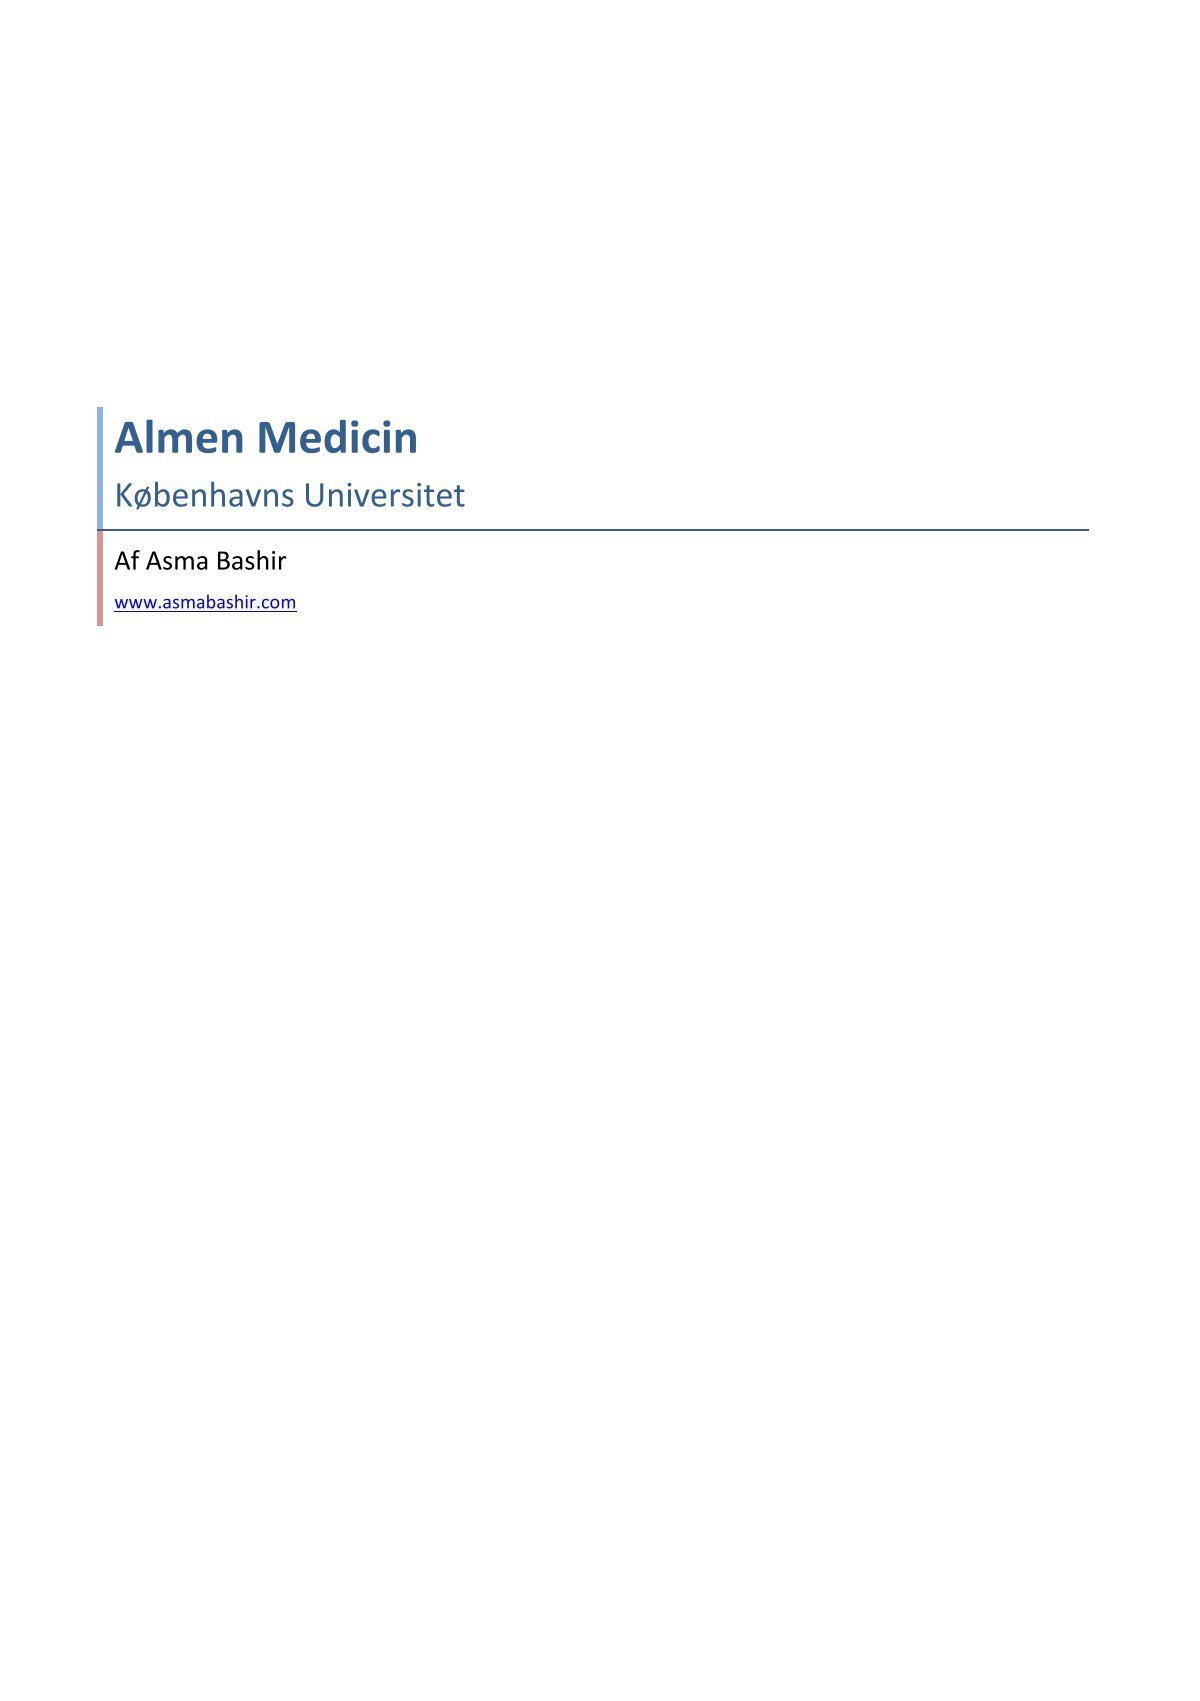 Almen Medicin (2012), Asma Bashir www.asmabashi